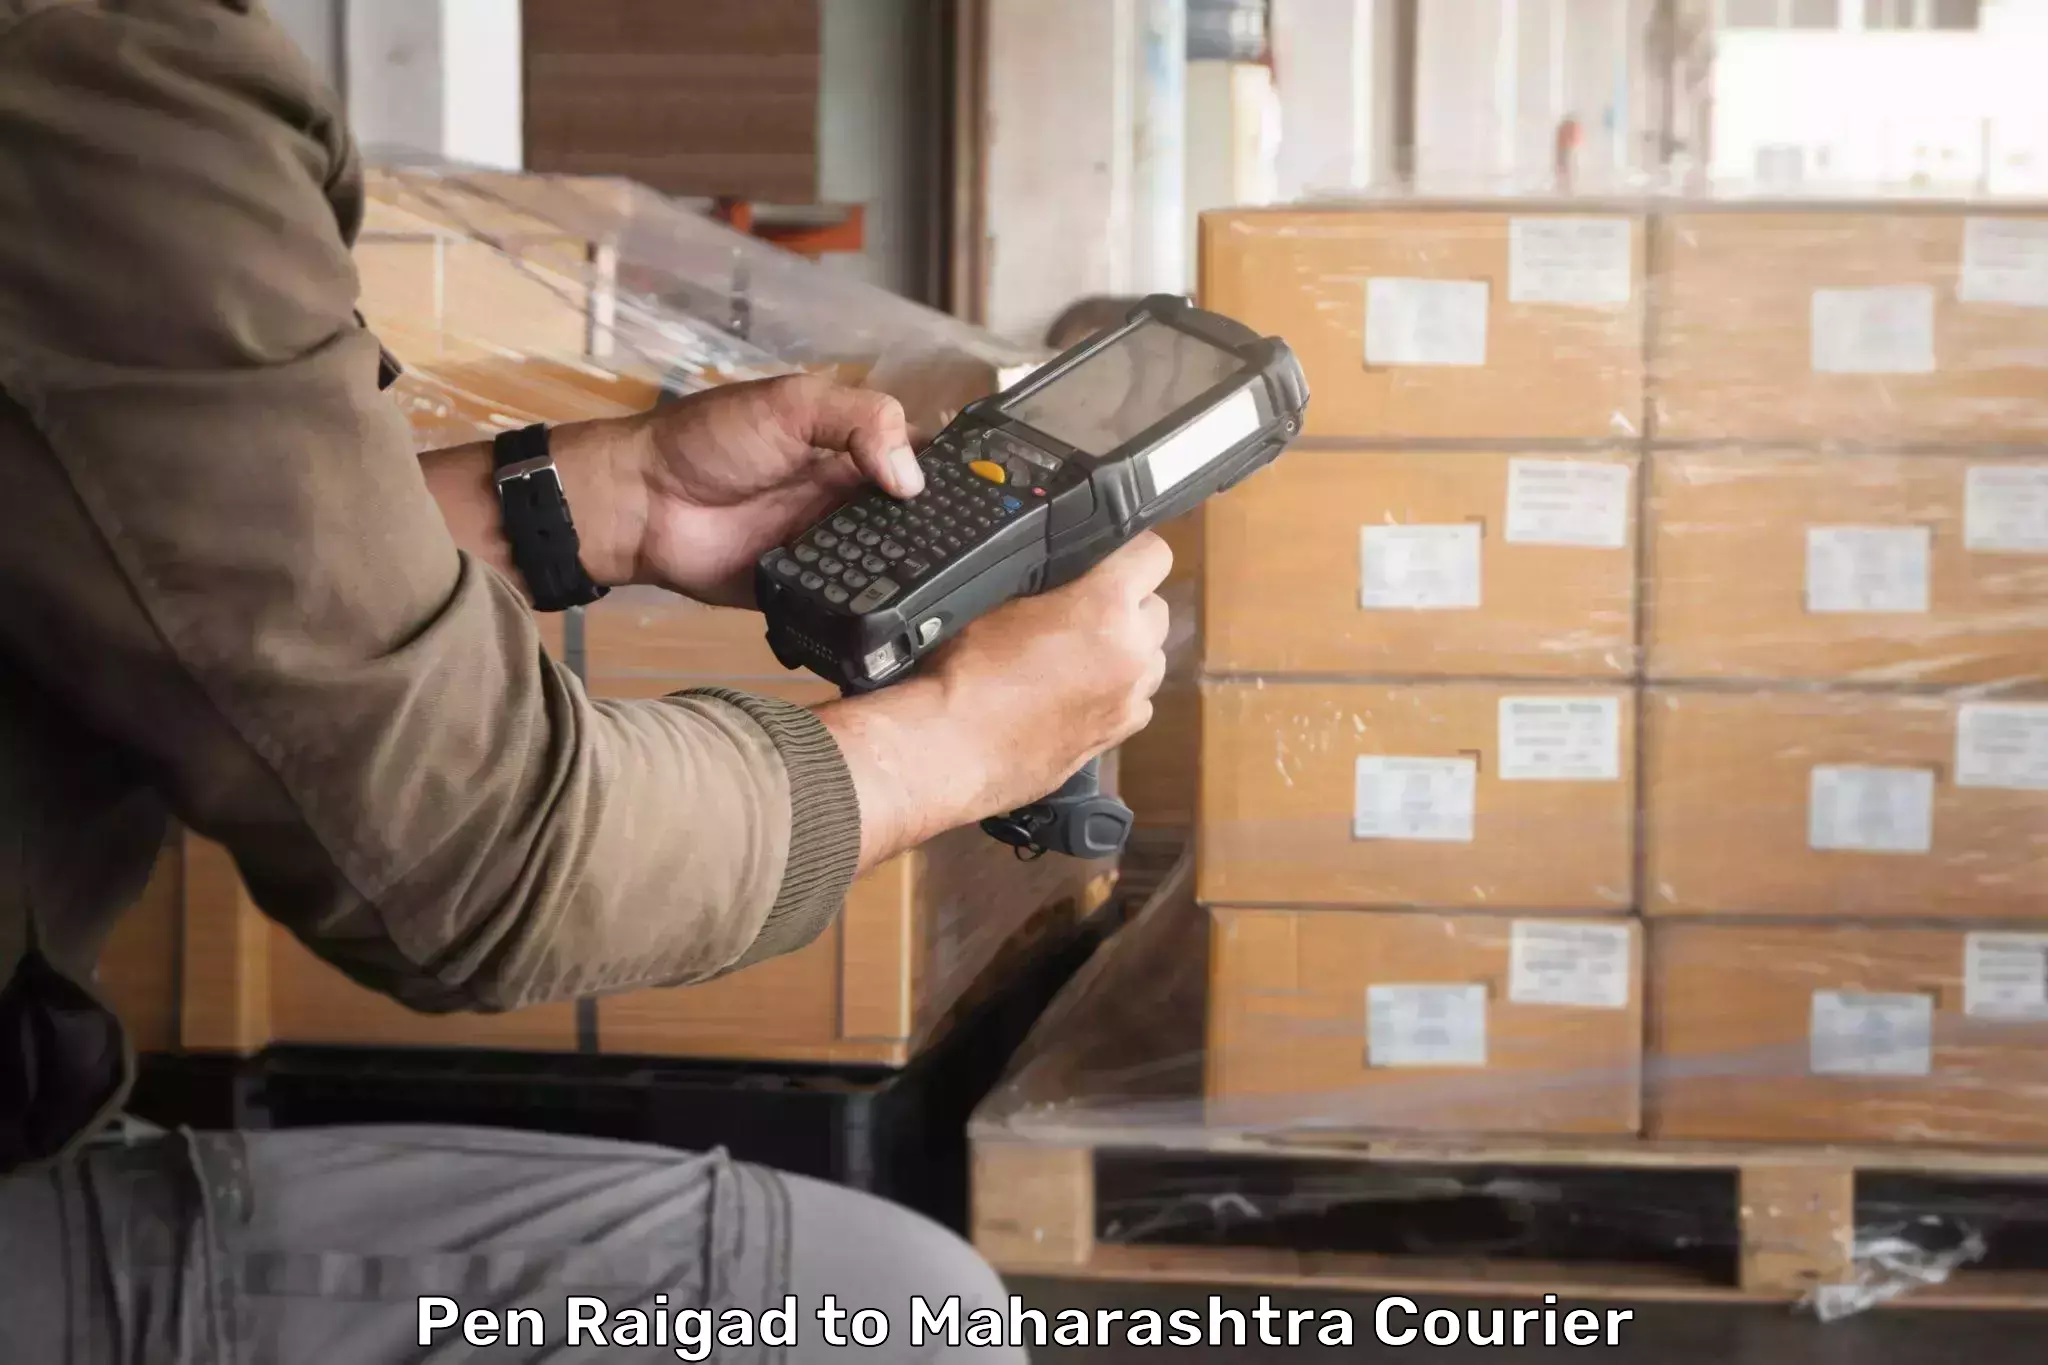 Courier insurance Pen Raigad to Maharashtra